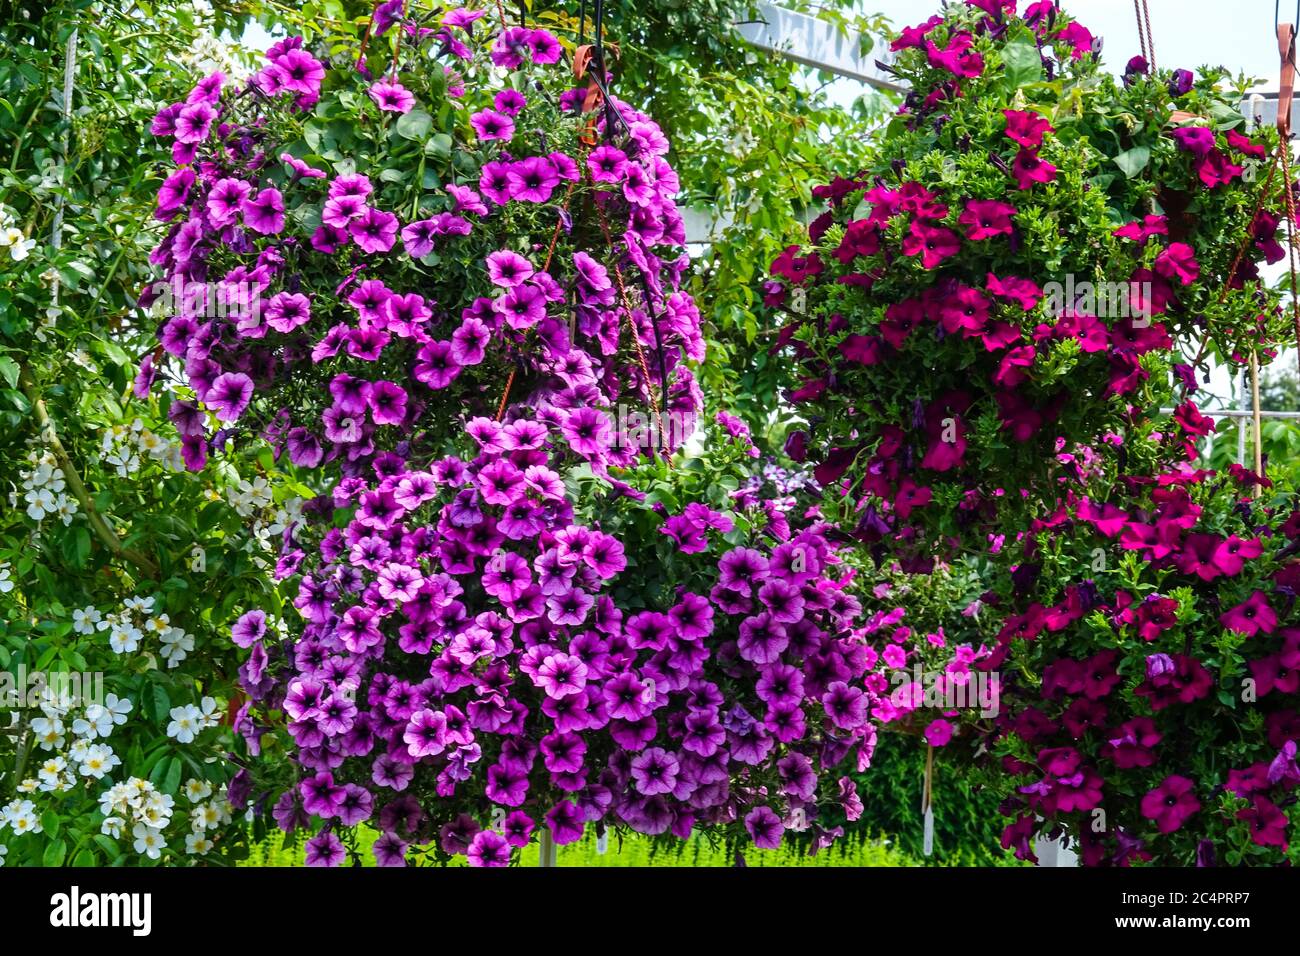 Flores colgantes fotografías e imágenes de alta resolución - Alamy